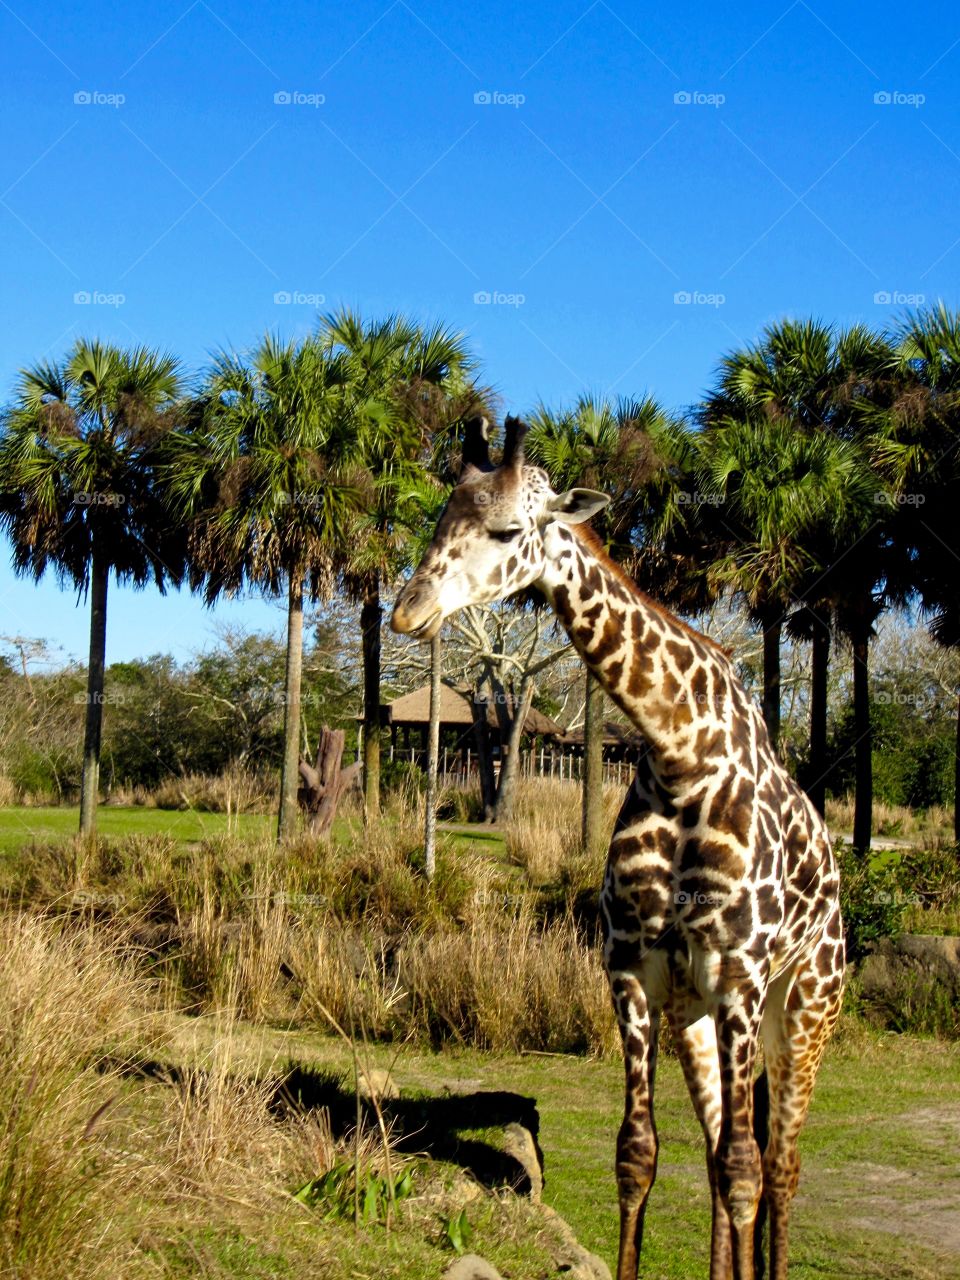 Taken at Disney's Animal Kingdom in one of their Kilimanjaro Safari ride. Enjoying another lovely Florida weather.